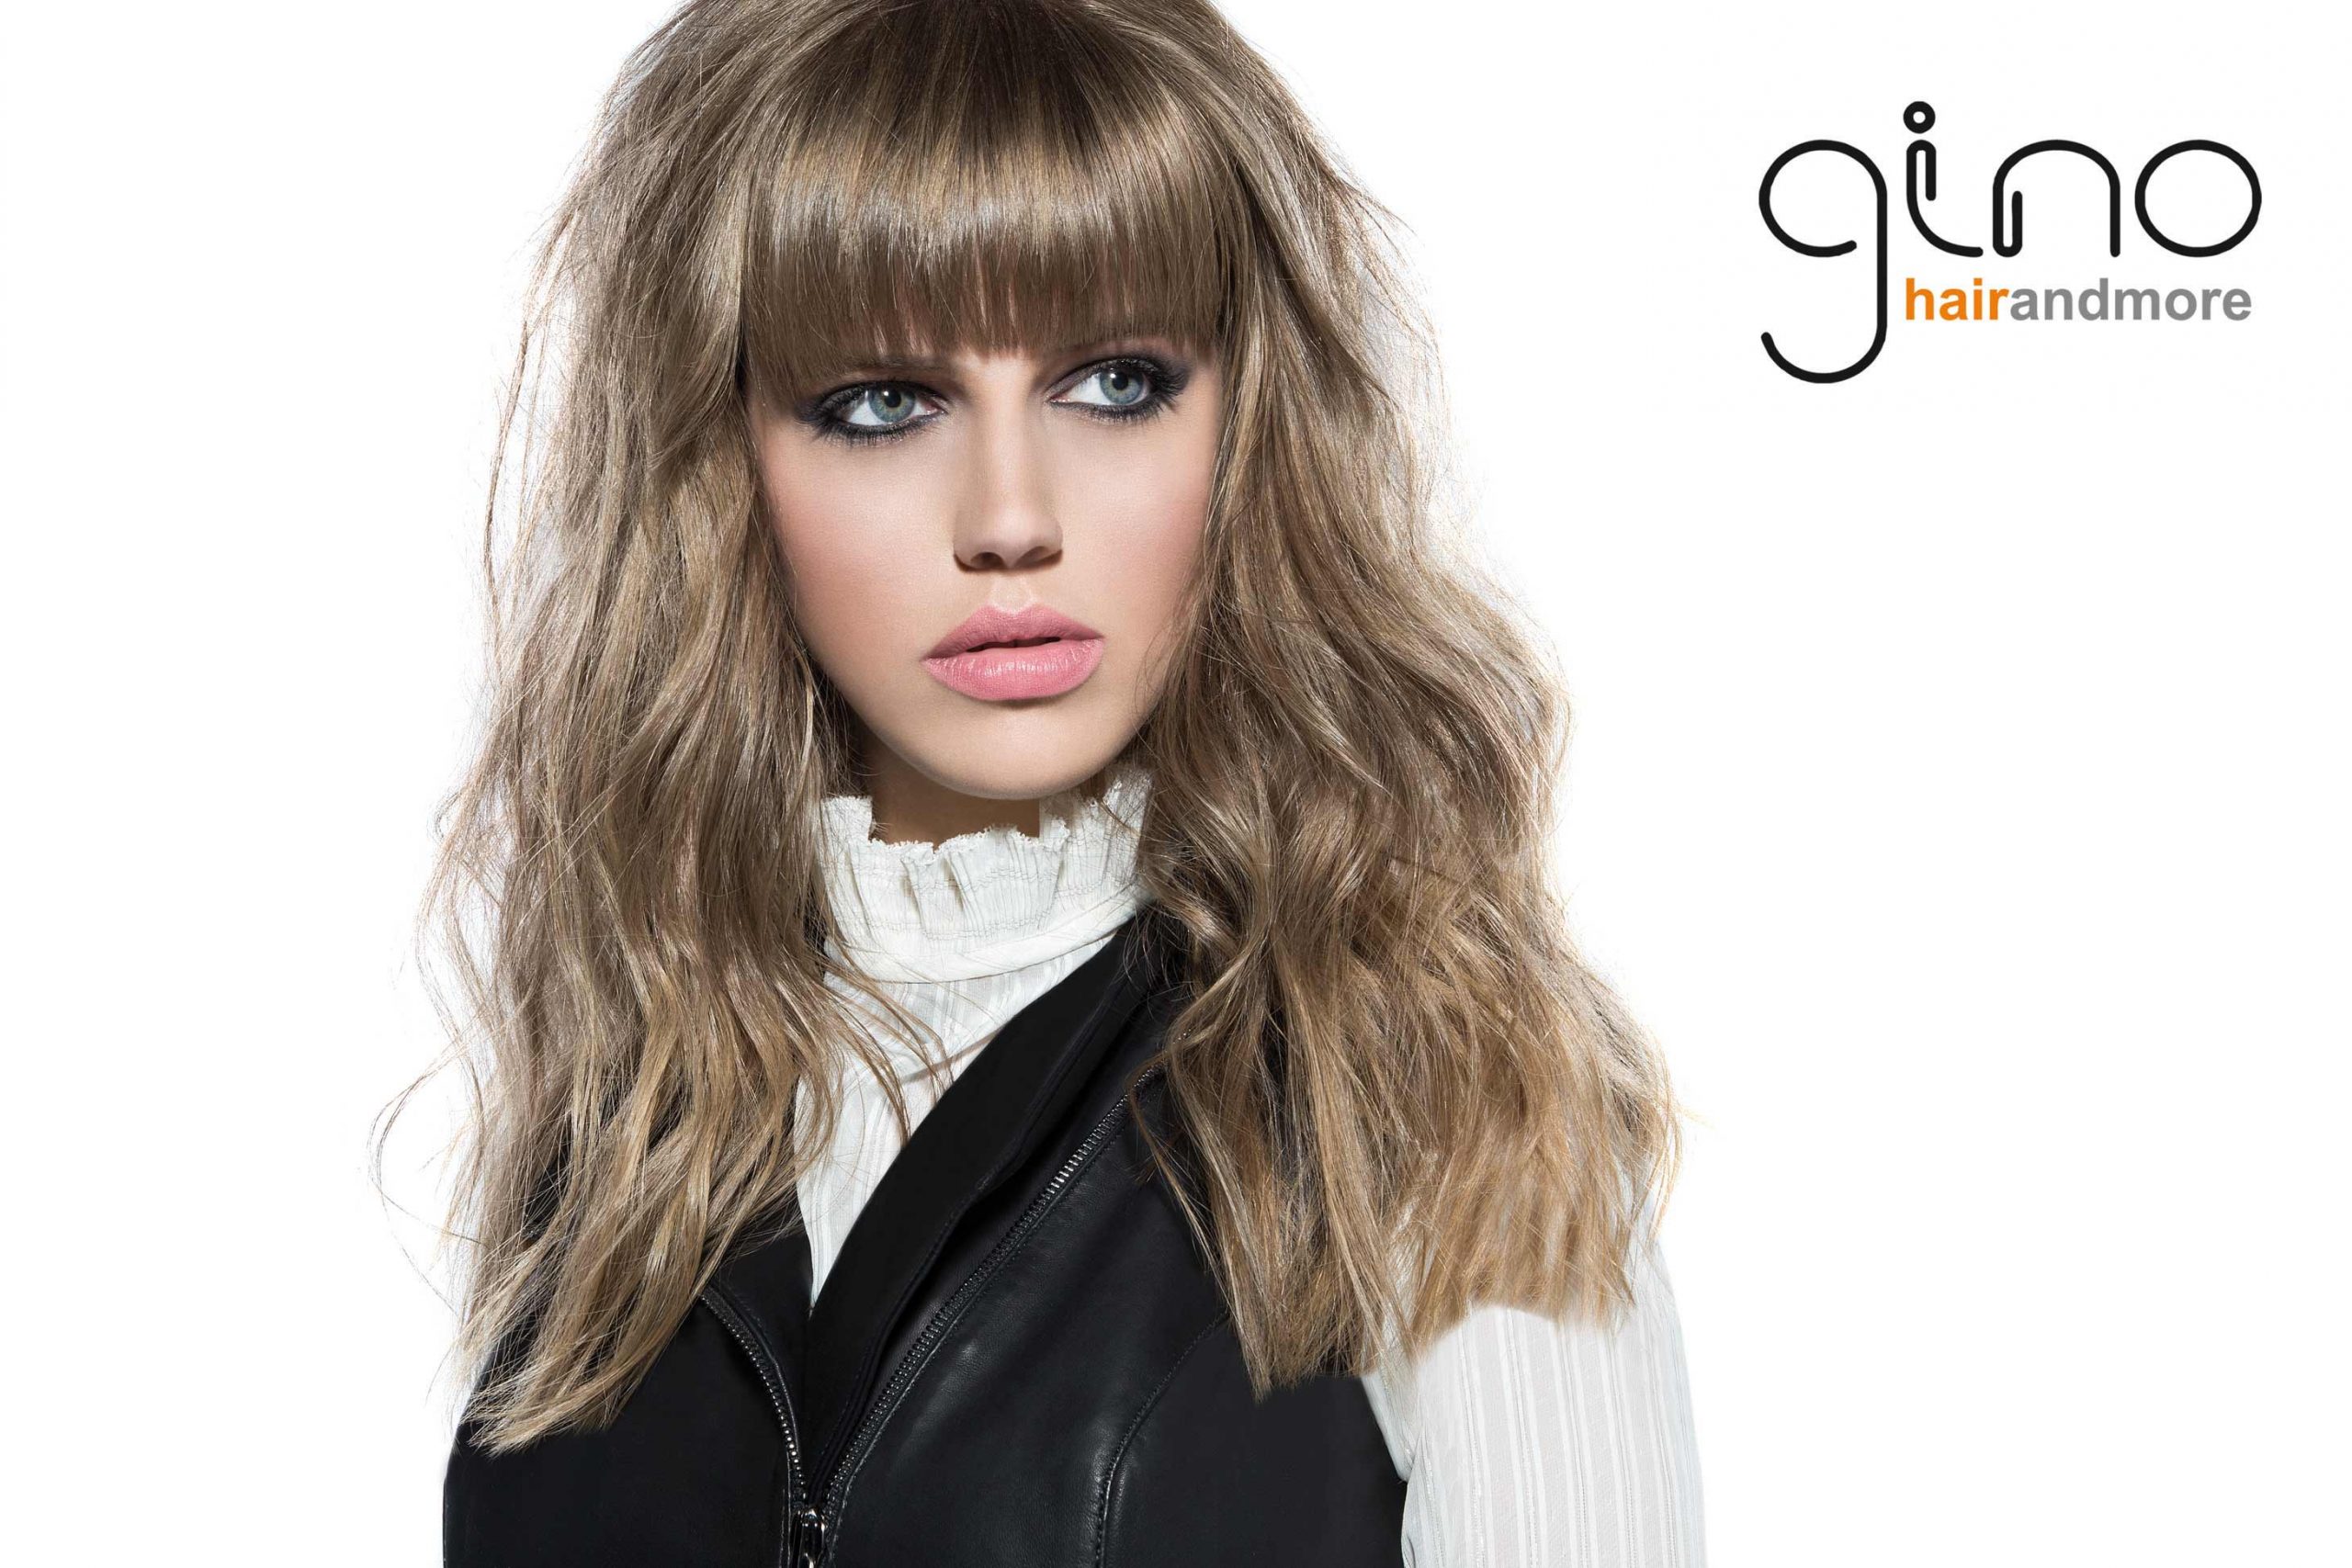 16/17 RESTART Hair Collection by gino hairandmore – Gino